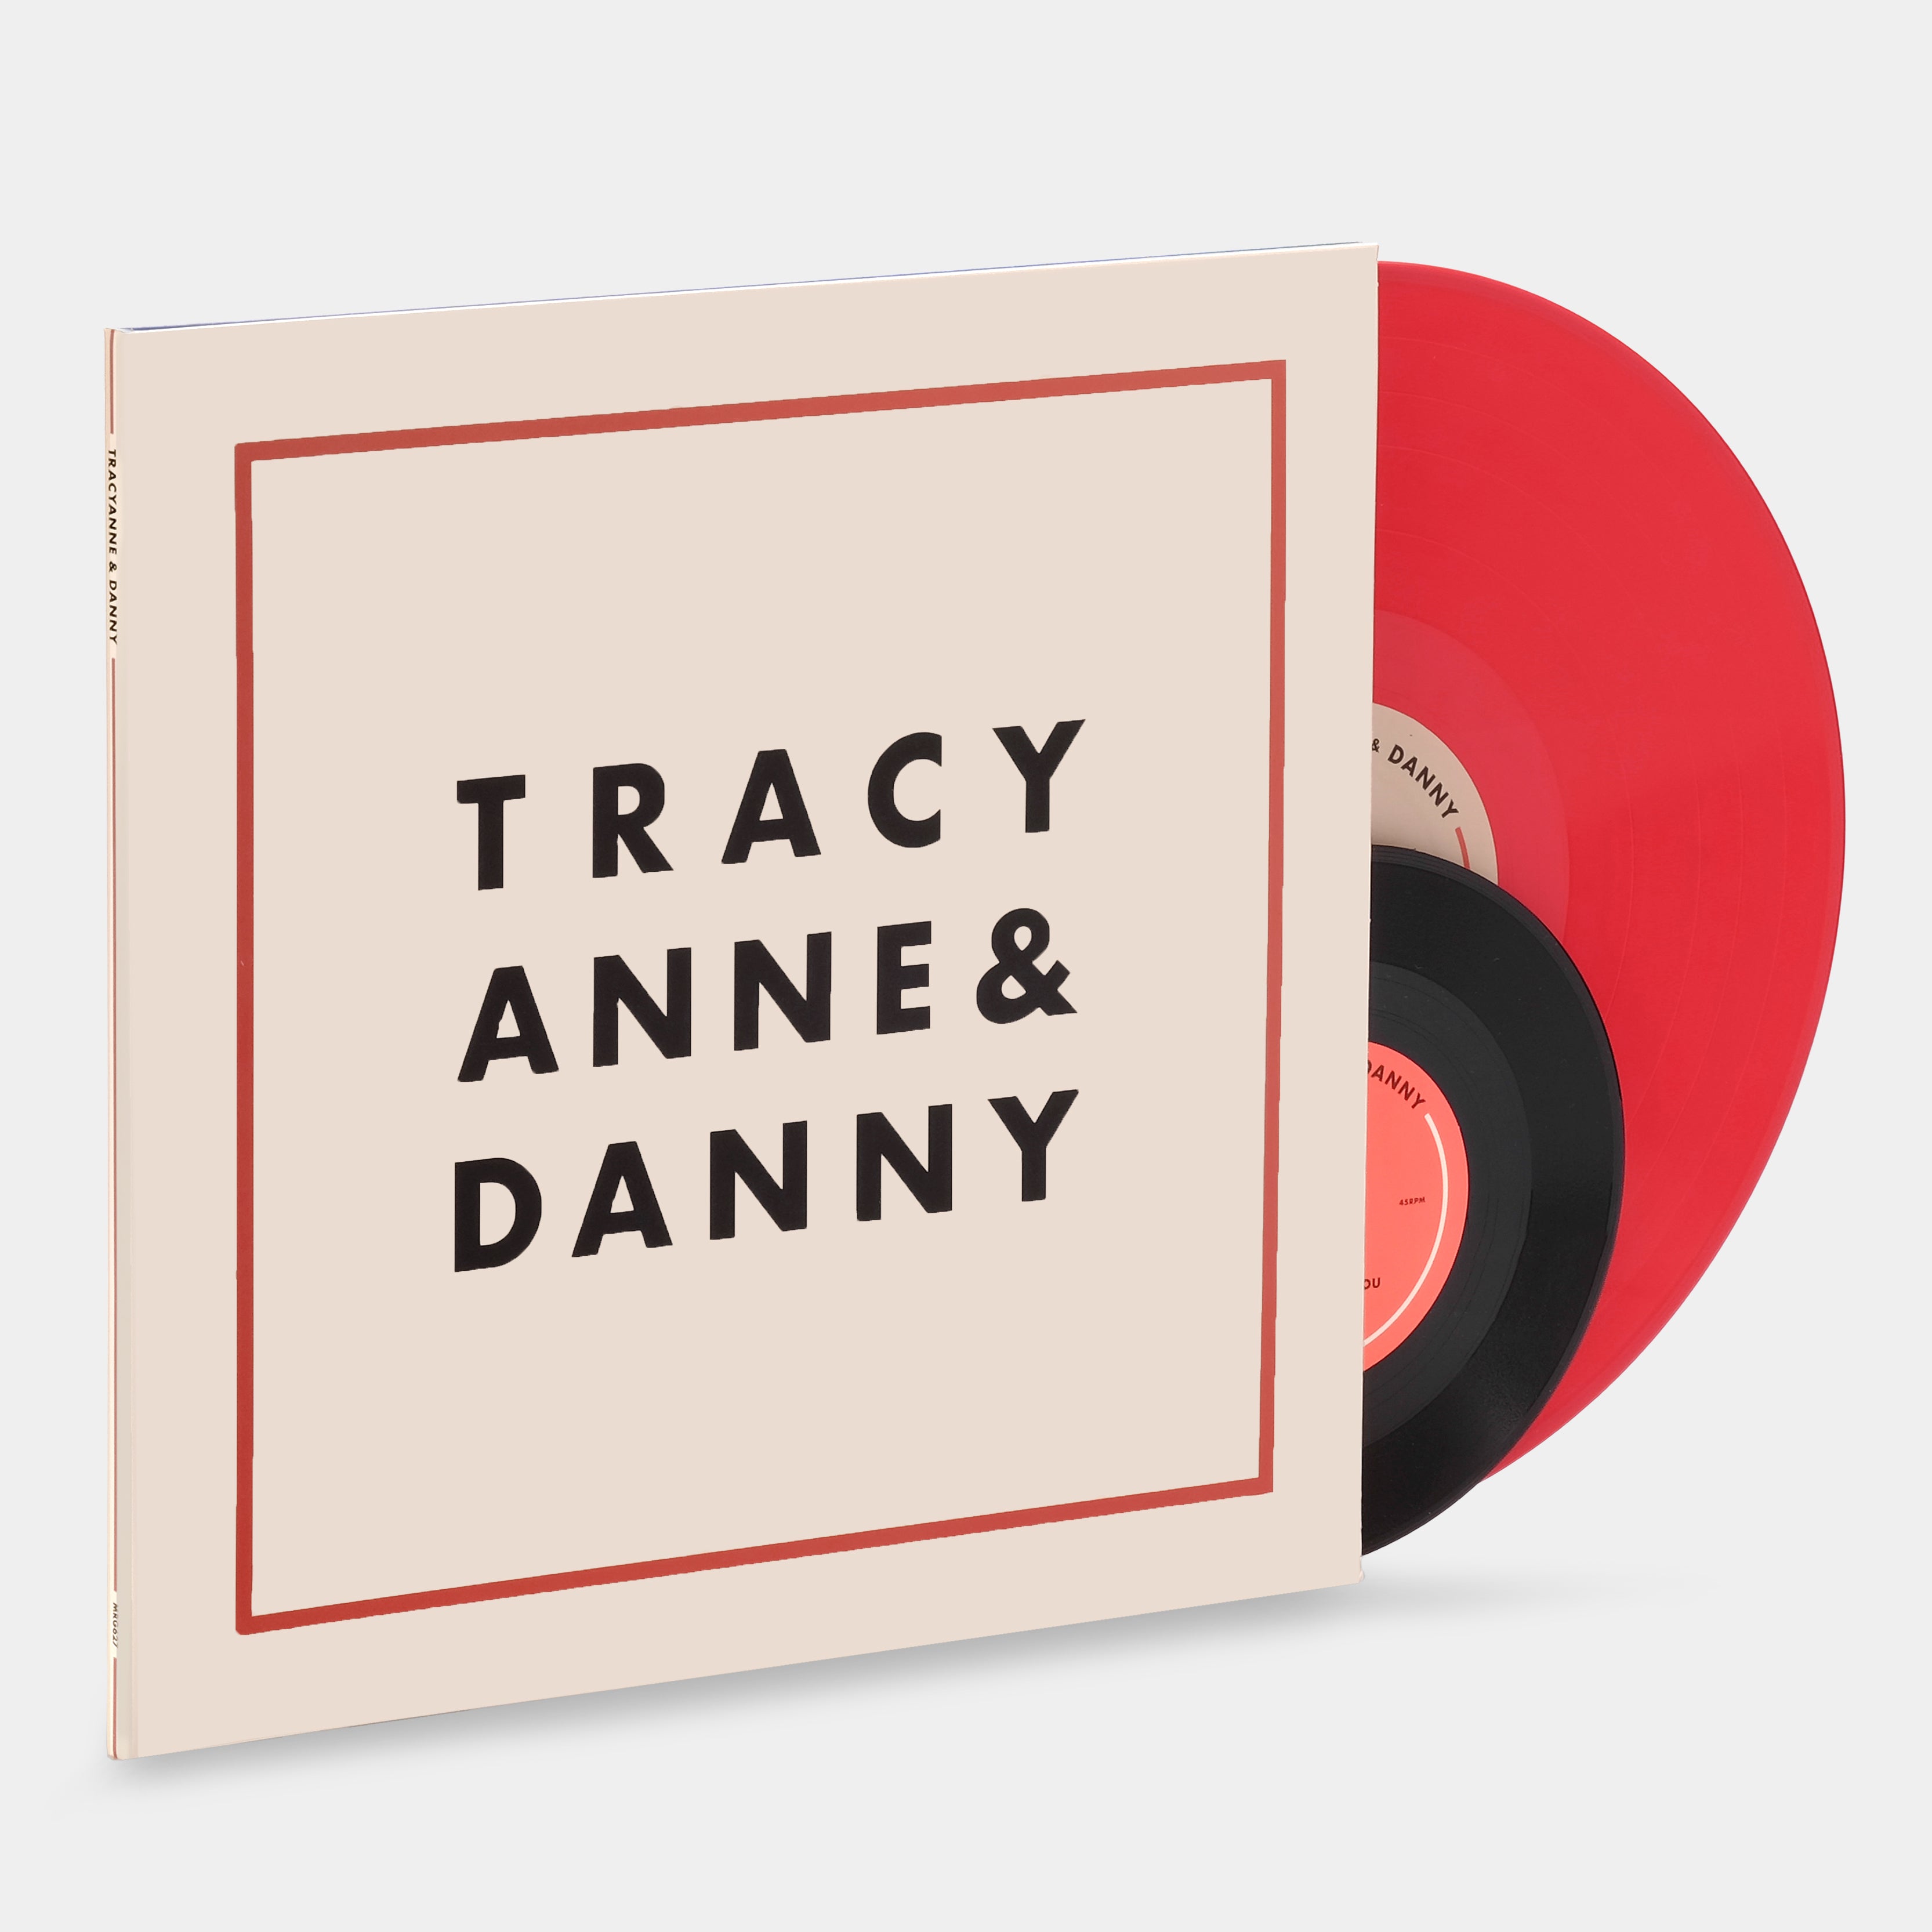 Tracyanne & Danny - Tracyanne & Danny (Peak Vinyl Edition) LP Red Vinyl Record + 7" Single